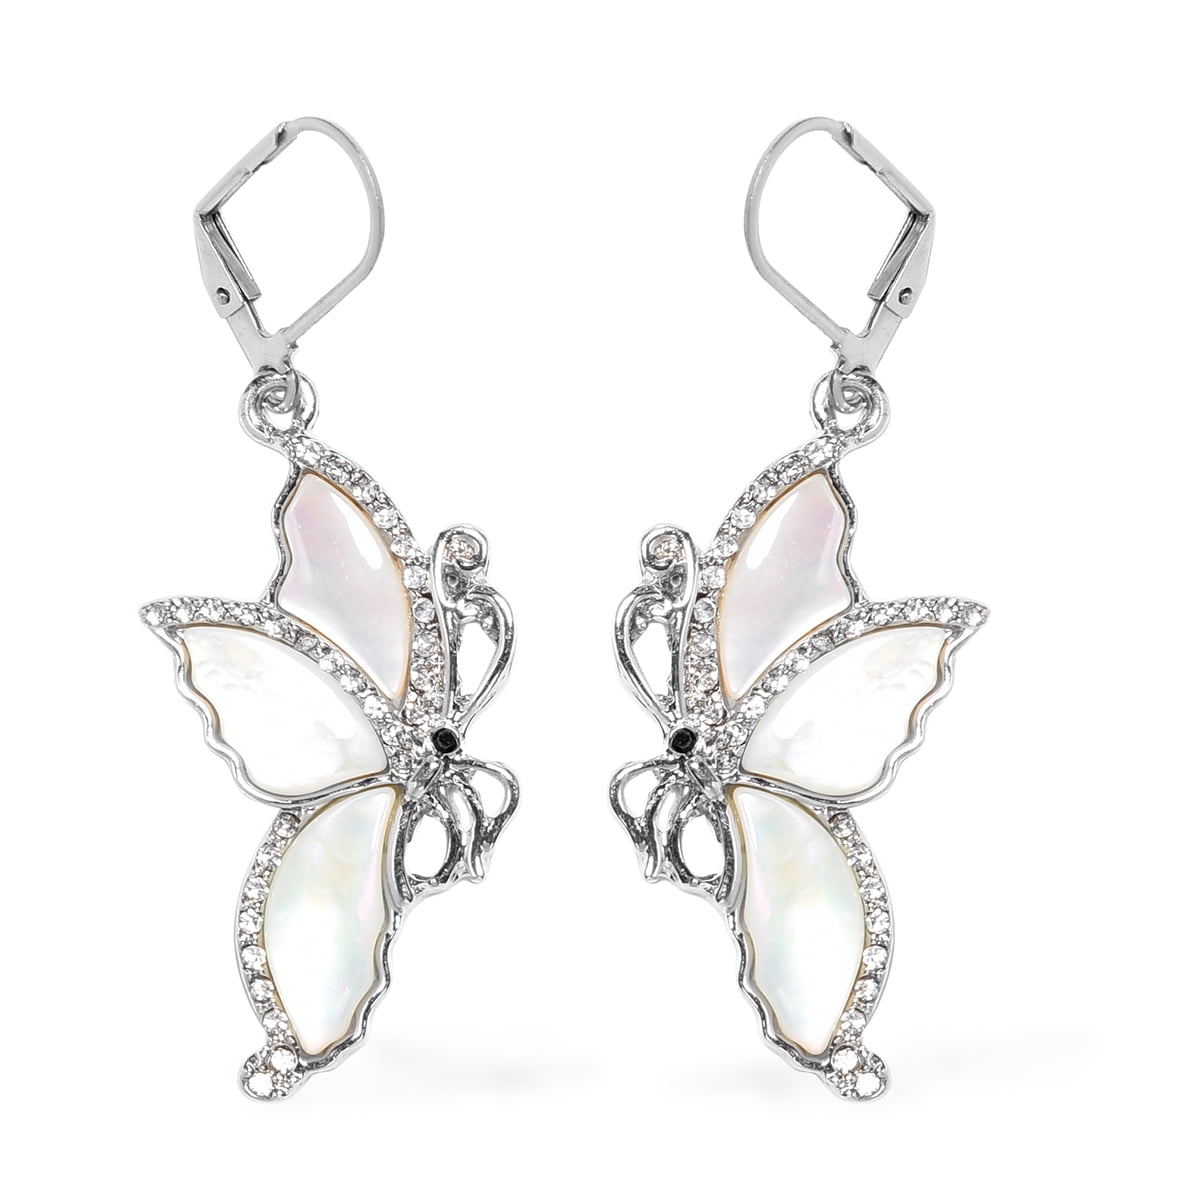 Elegant and stylish earrings